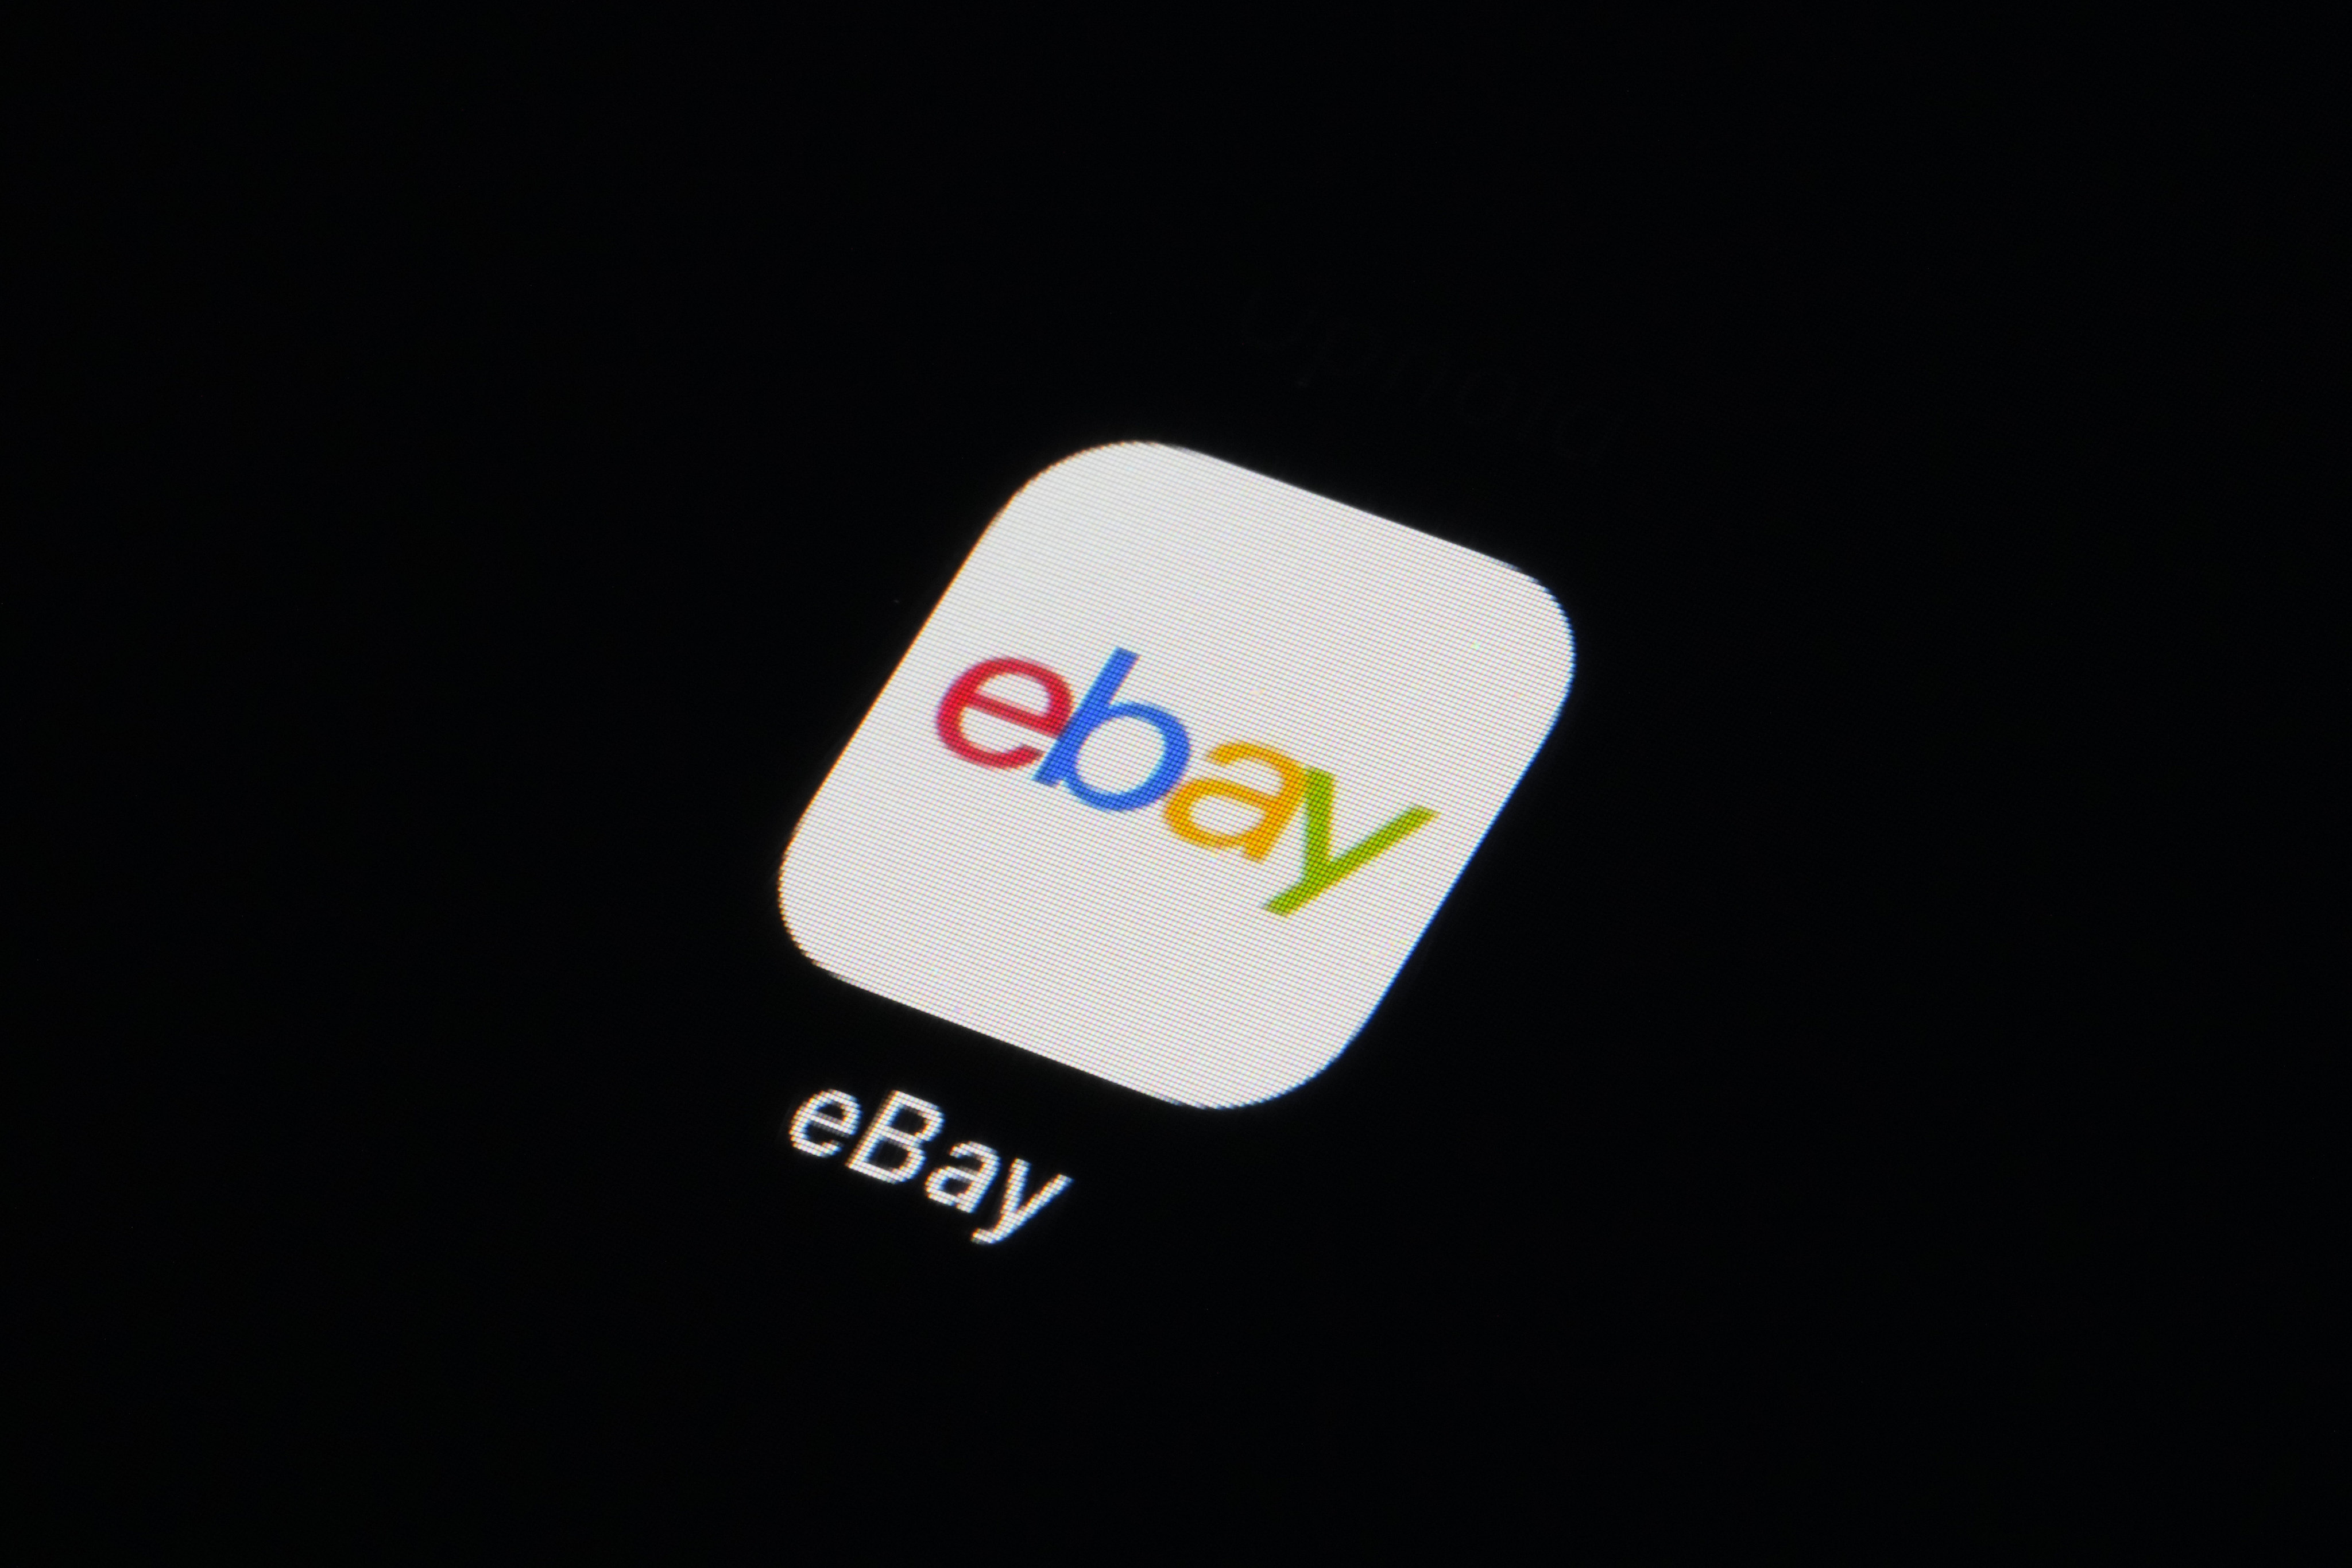 US prosecutors said eBay engaged in ‘absolutely horrific’ criminal conduct. Photo: AP